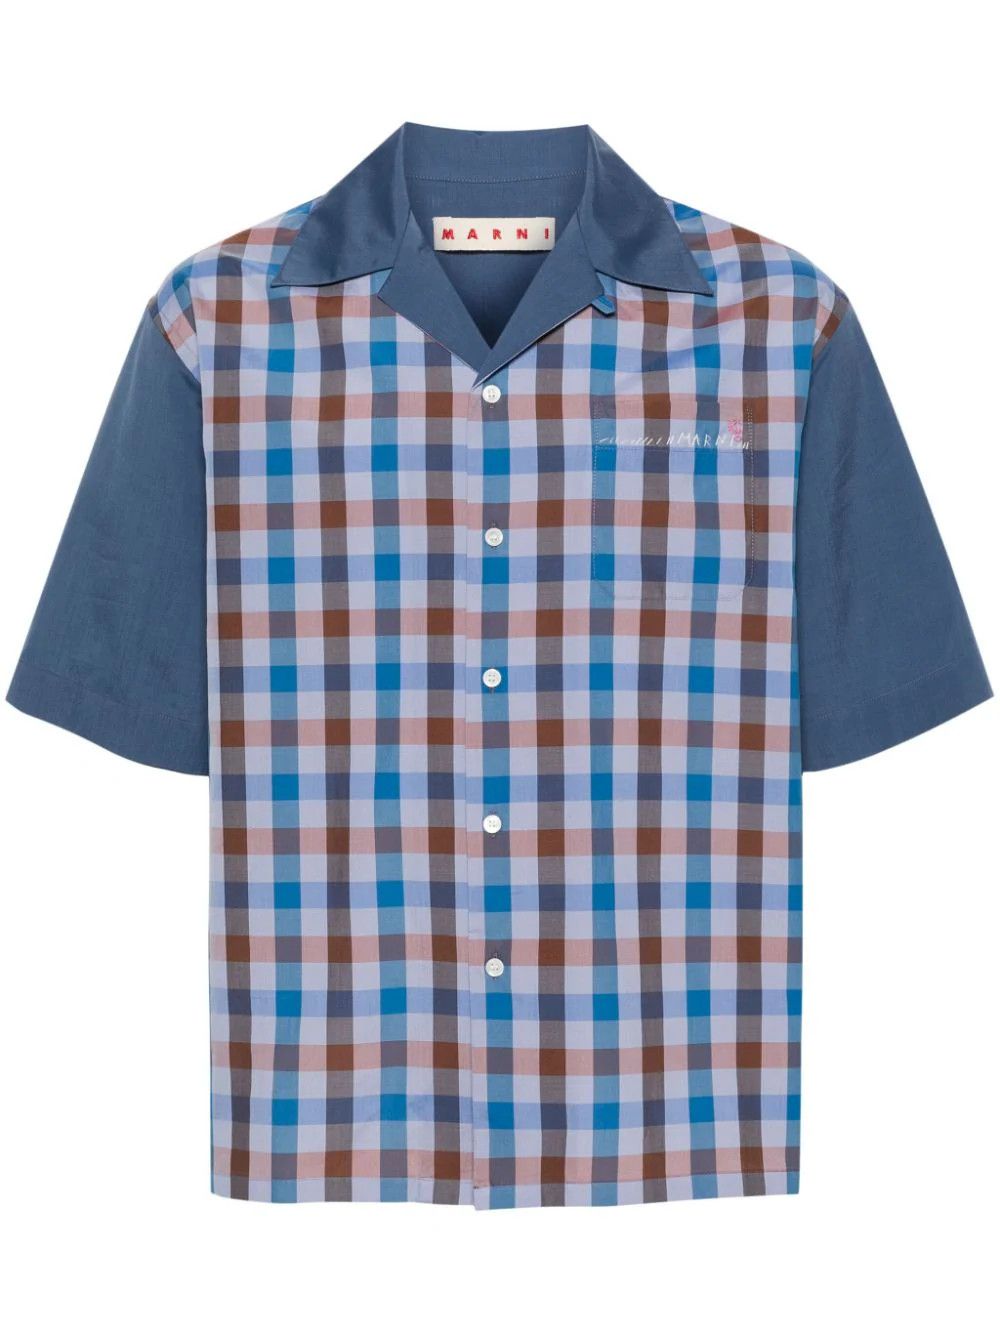 gingham pattern bowling shirt - 1